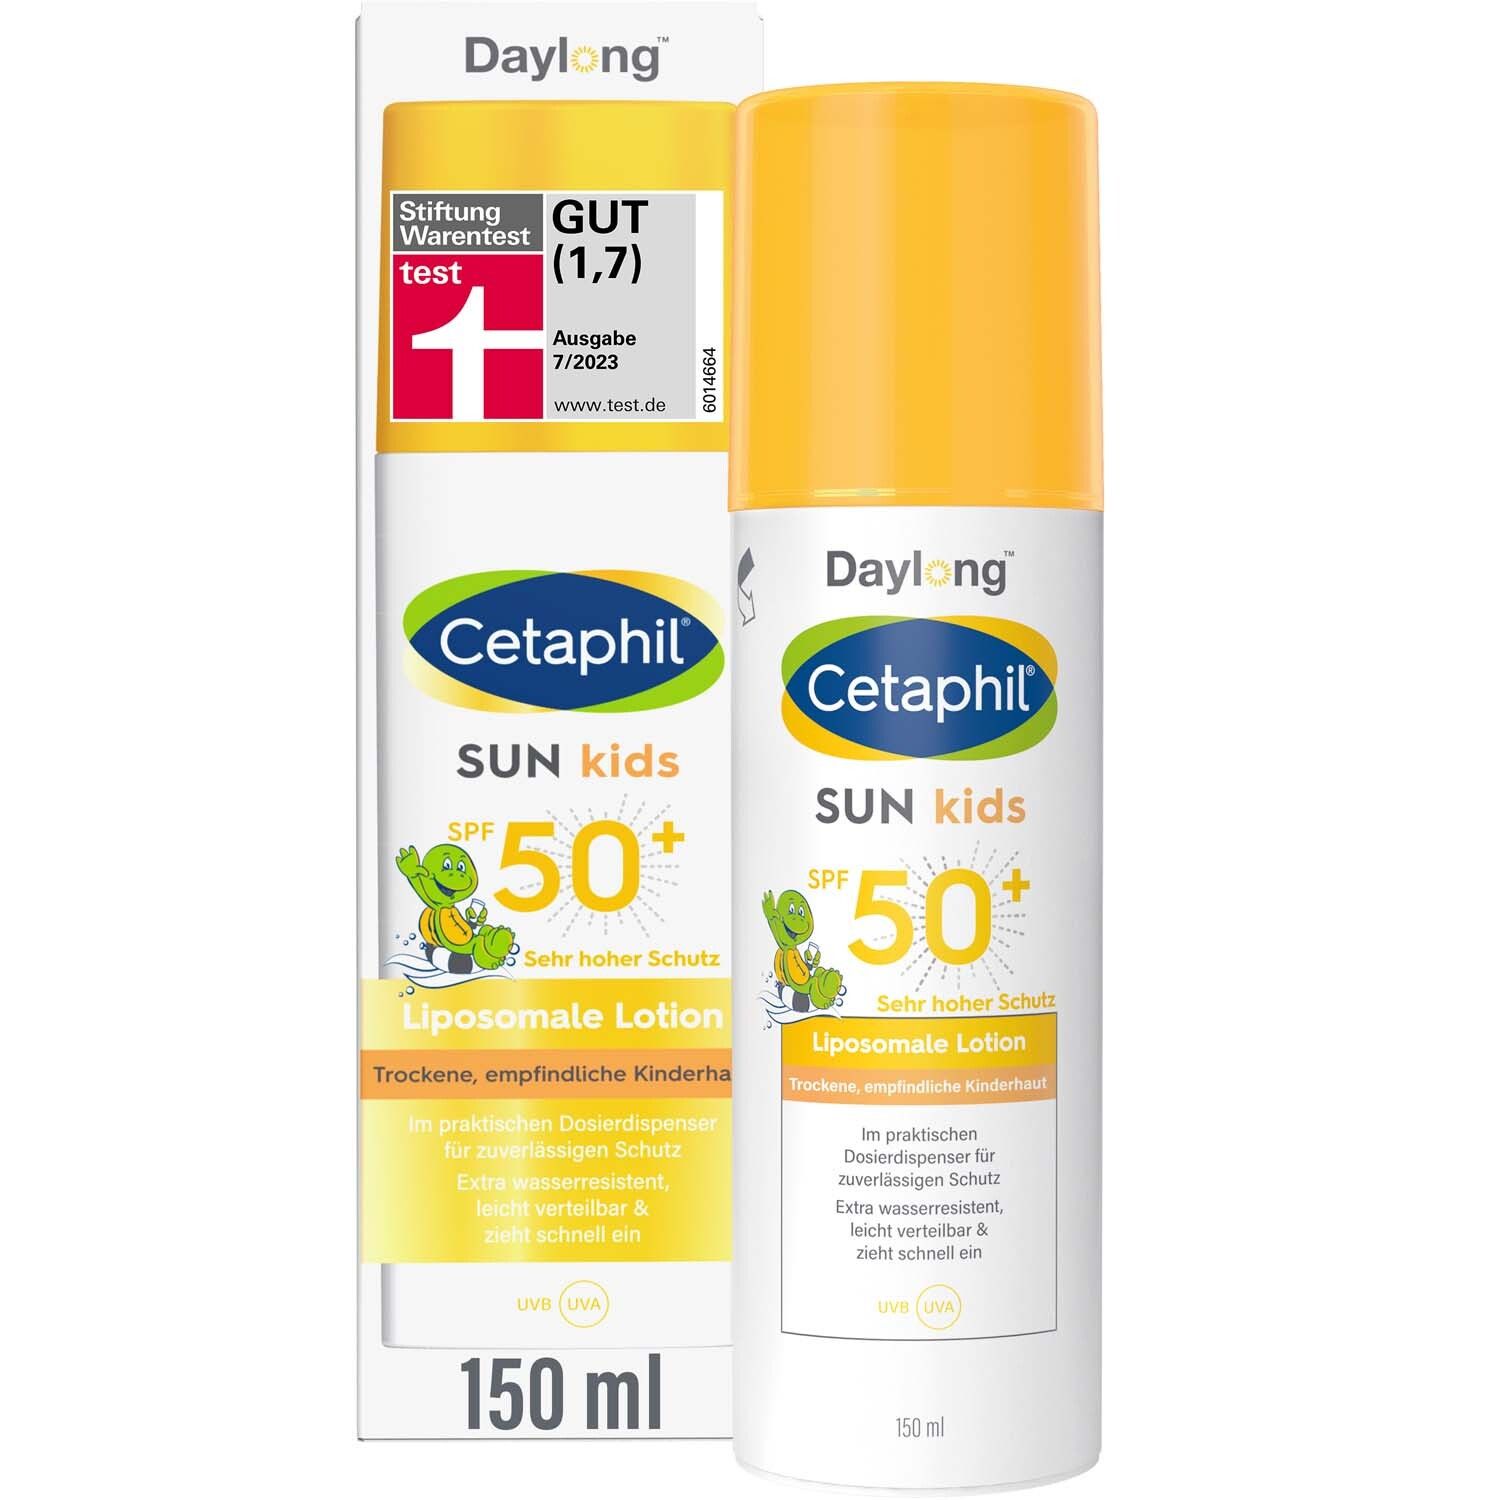 Cetaphil® Sun Daylong™ Kids SPF 50+ Liosomale Lotion